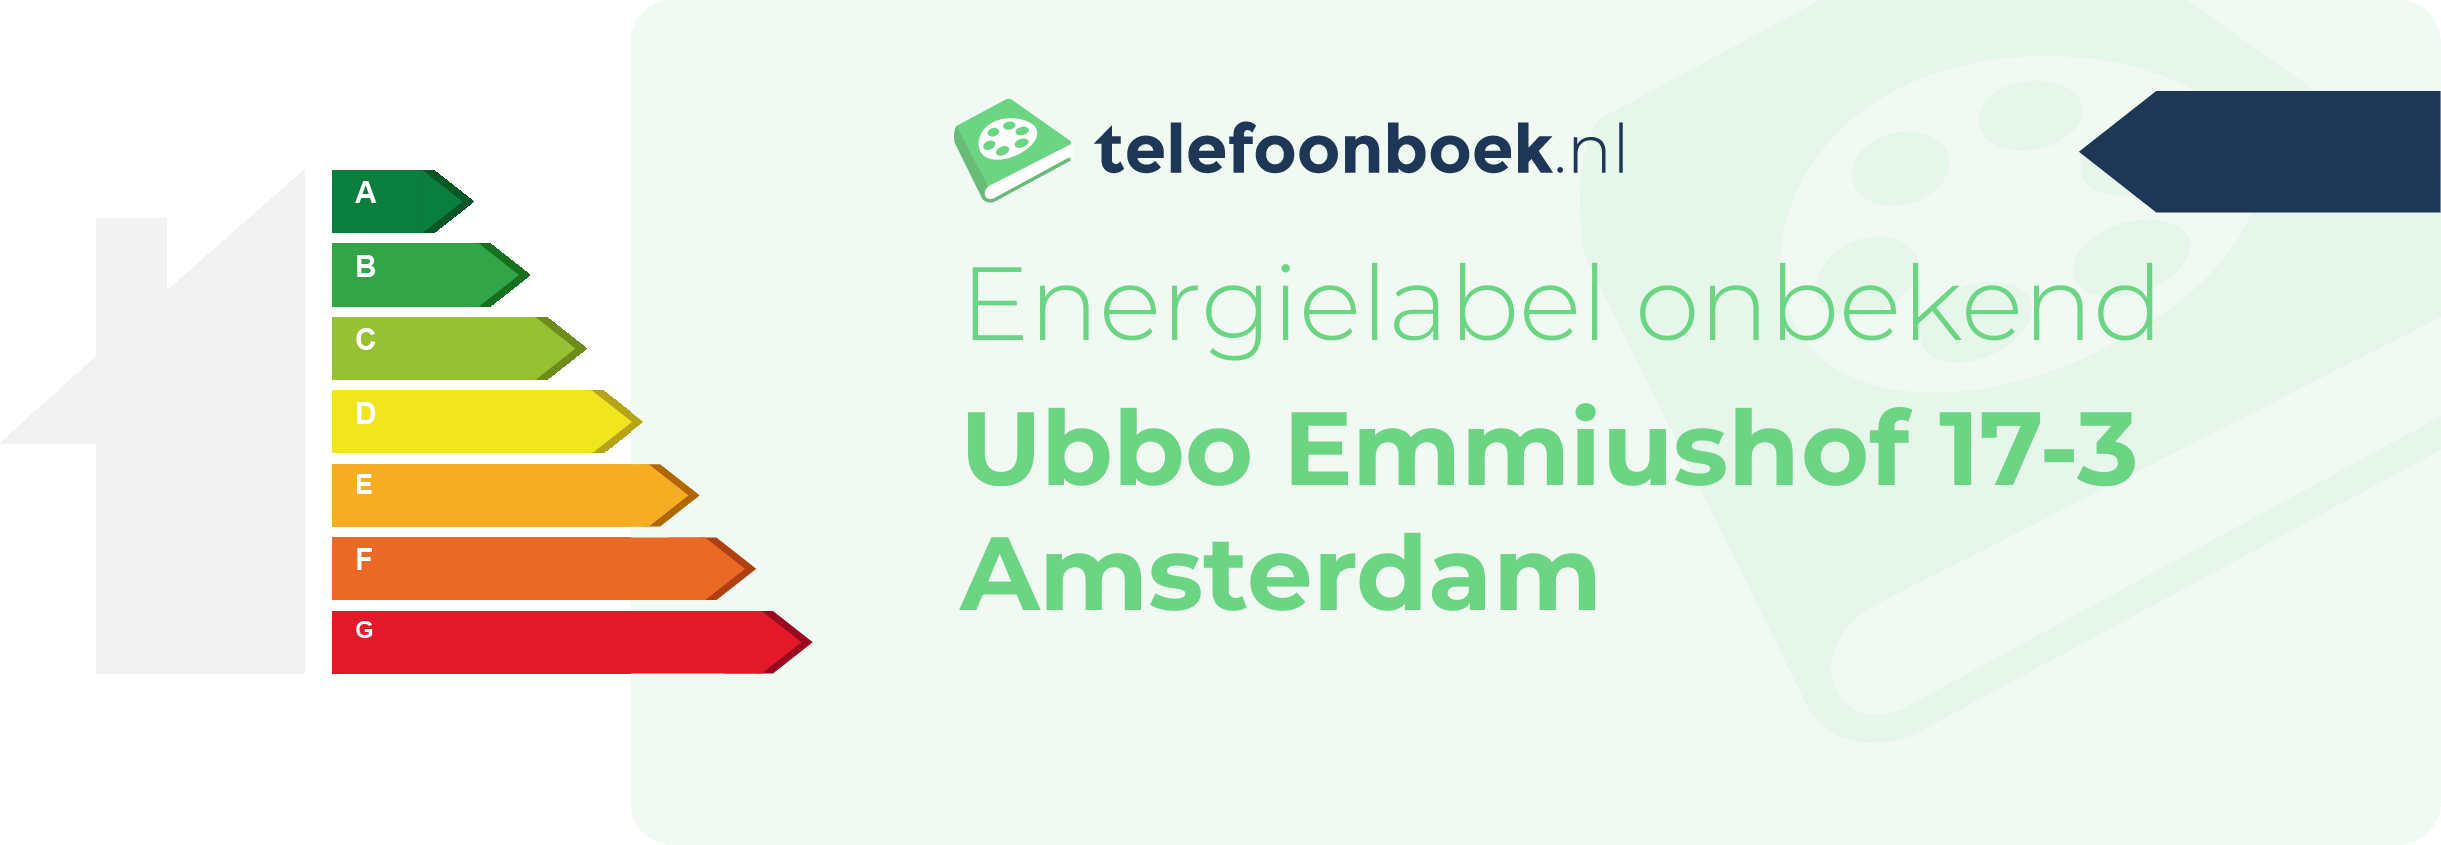 Energielabel Ubbo Emmiushof 17-3 Amsterdam